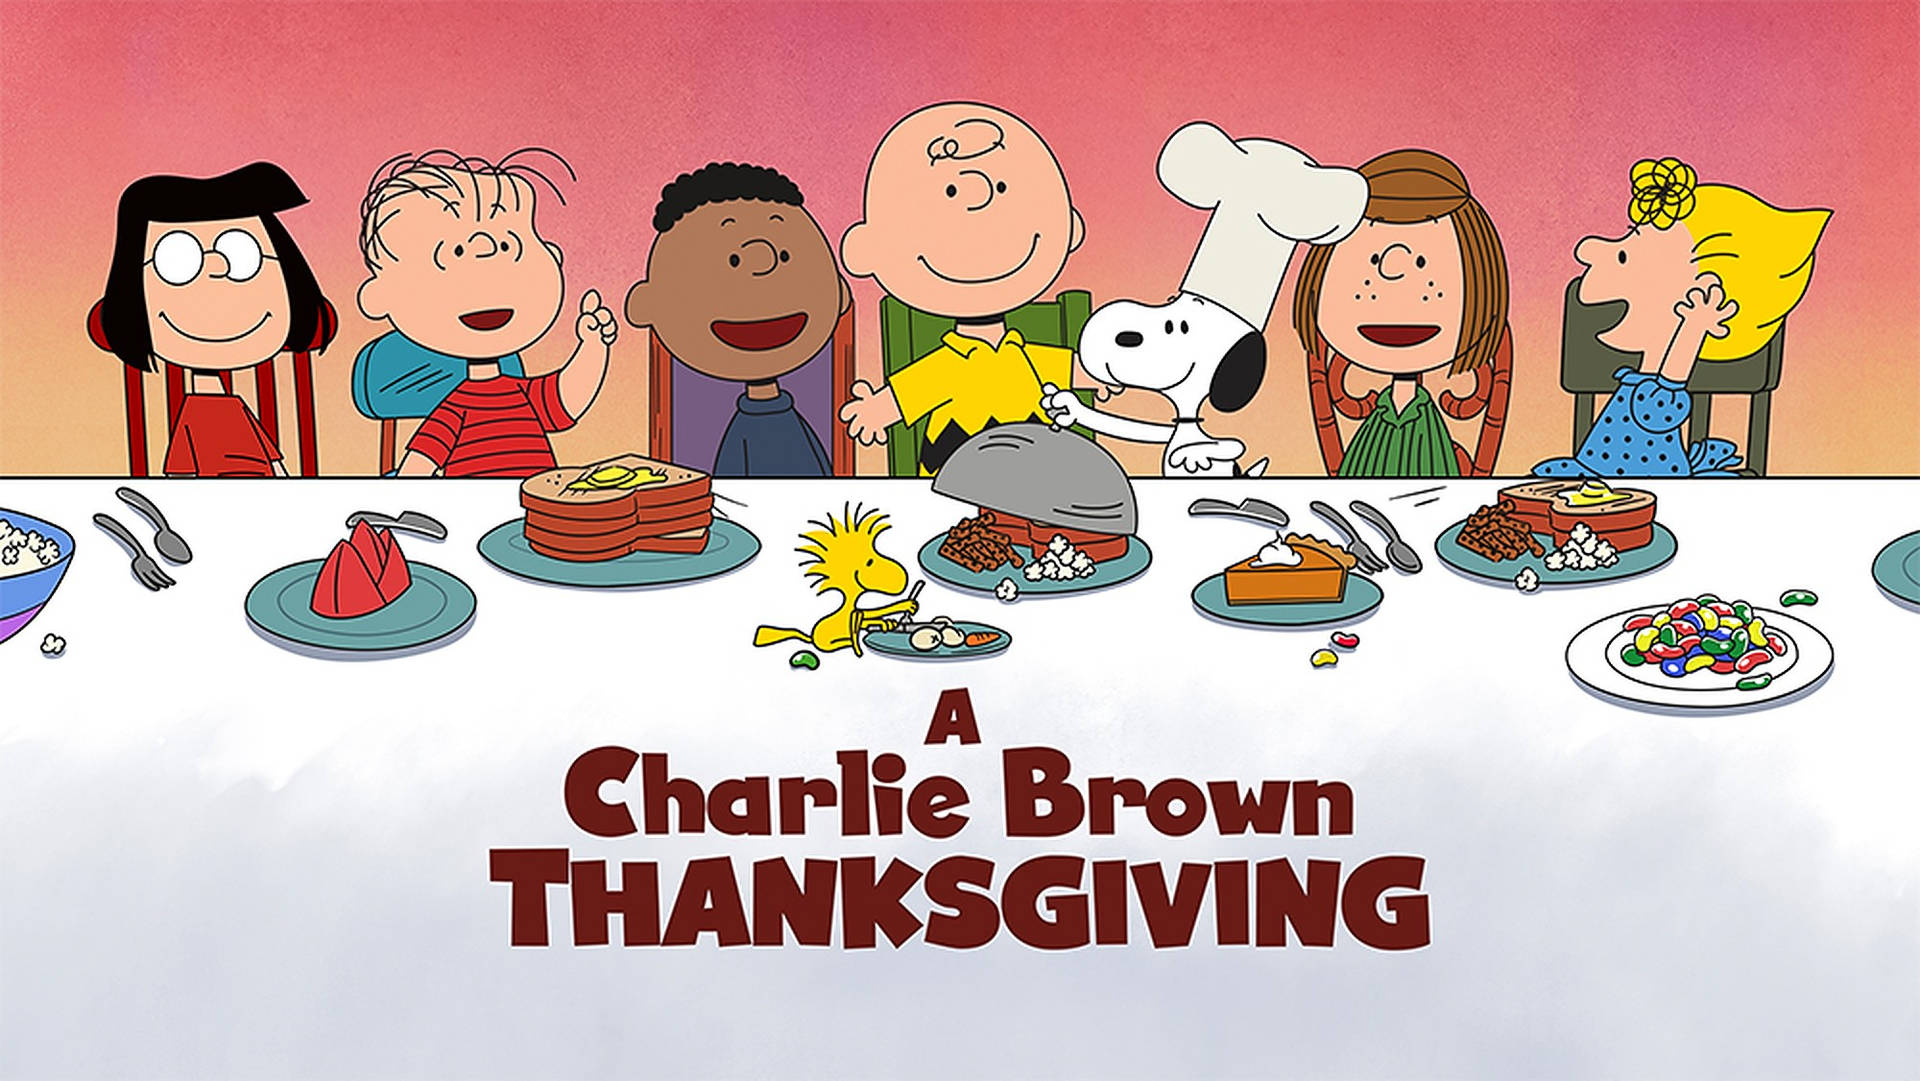 Charlie Brown Thanksgiving Feast